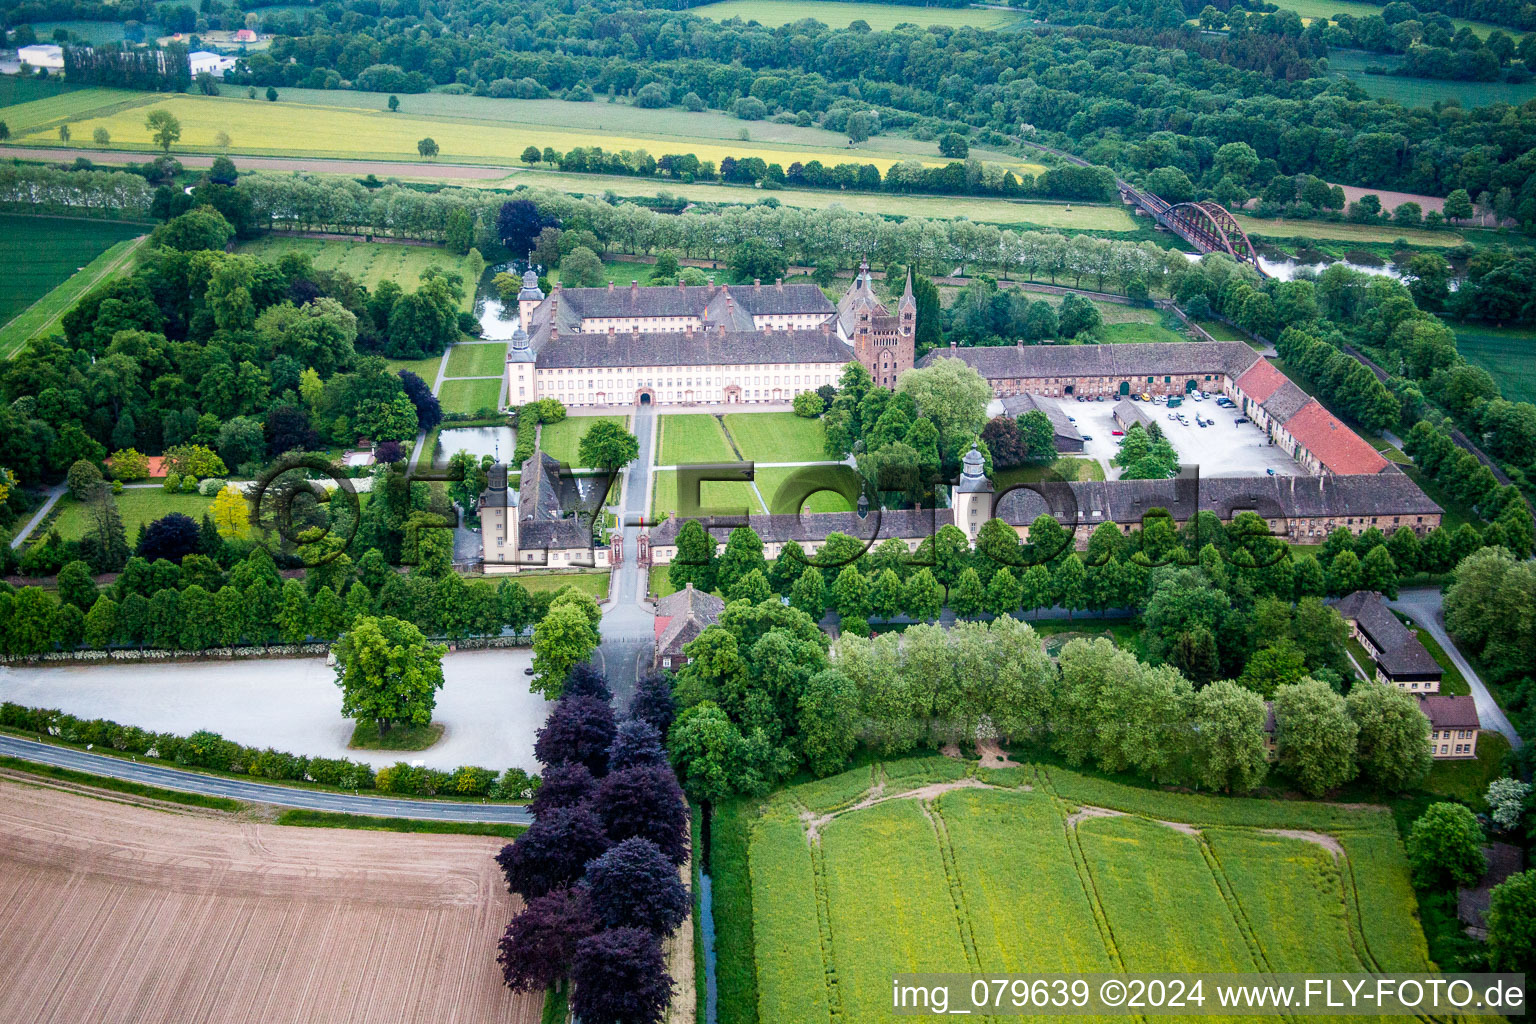 Complex of buildings of the monastery Schloss/Kloster Corvey (UNESCO Weltkulturerbe) in Hoexter in the state North Rhine-Westphalia, Germany